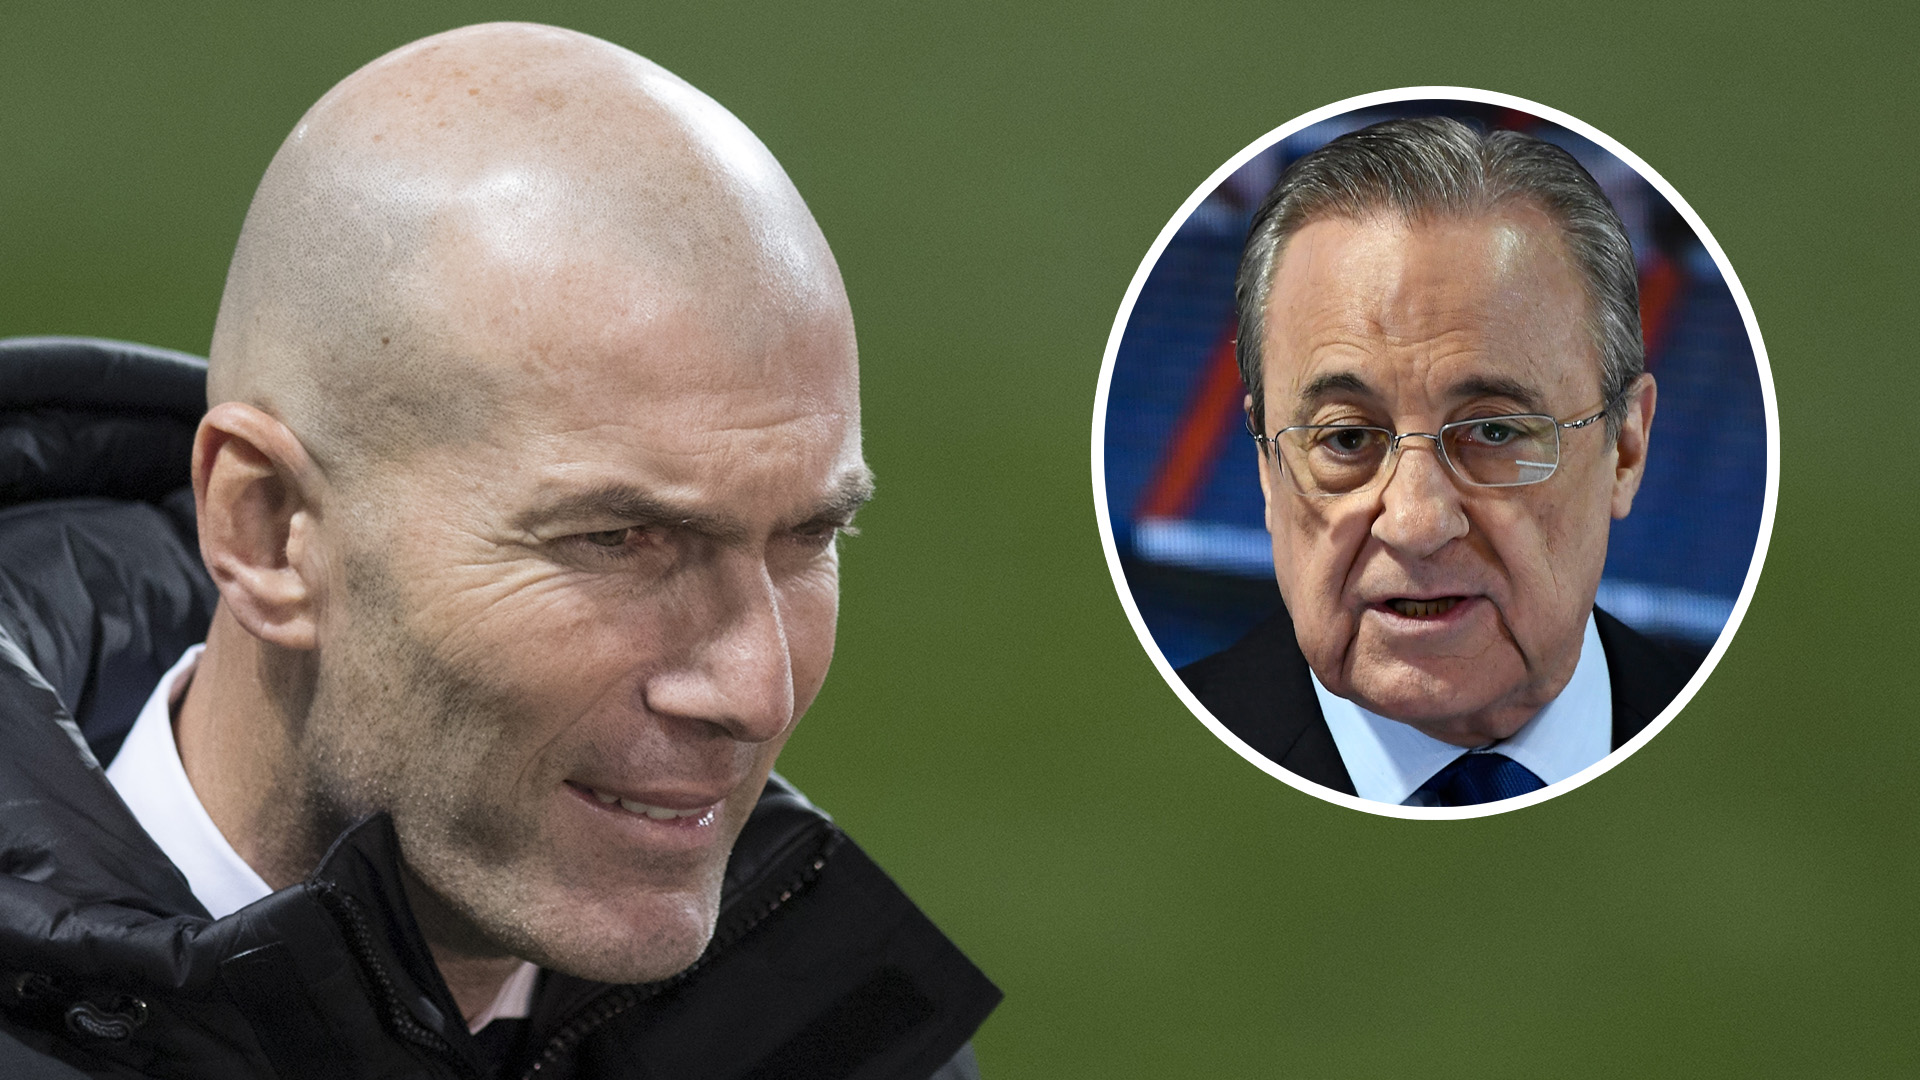 Real Madrid won't sack Zidane despite humbling Copa del Rey exit